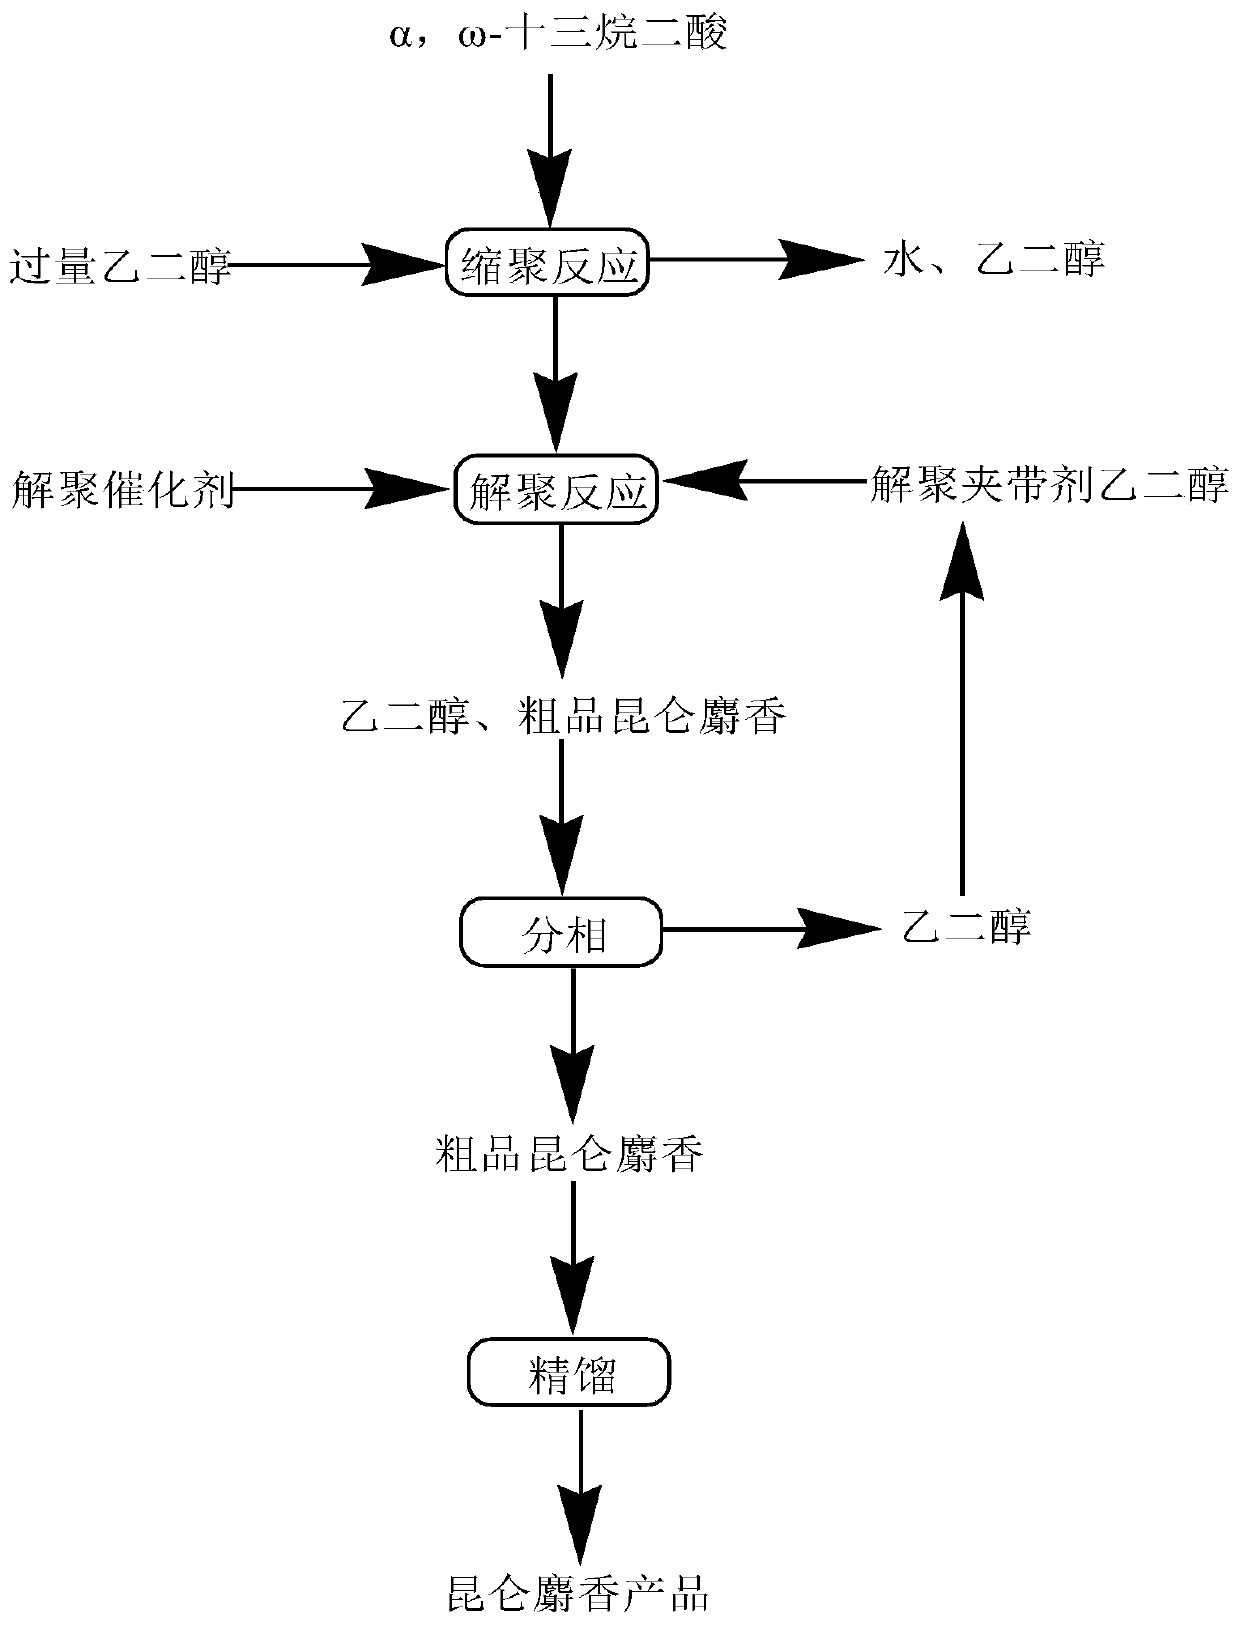 Preparation method of Kunlun musk